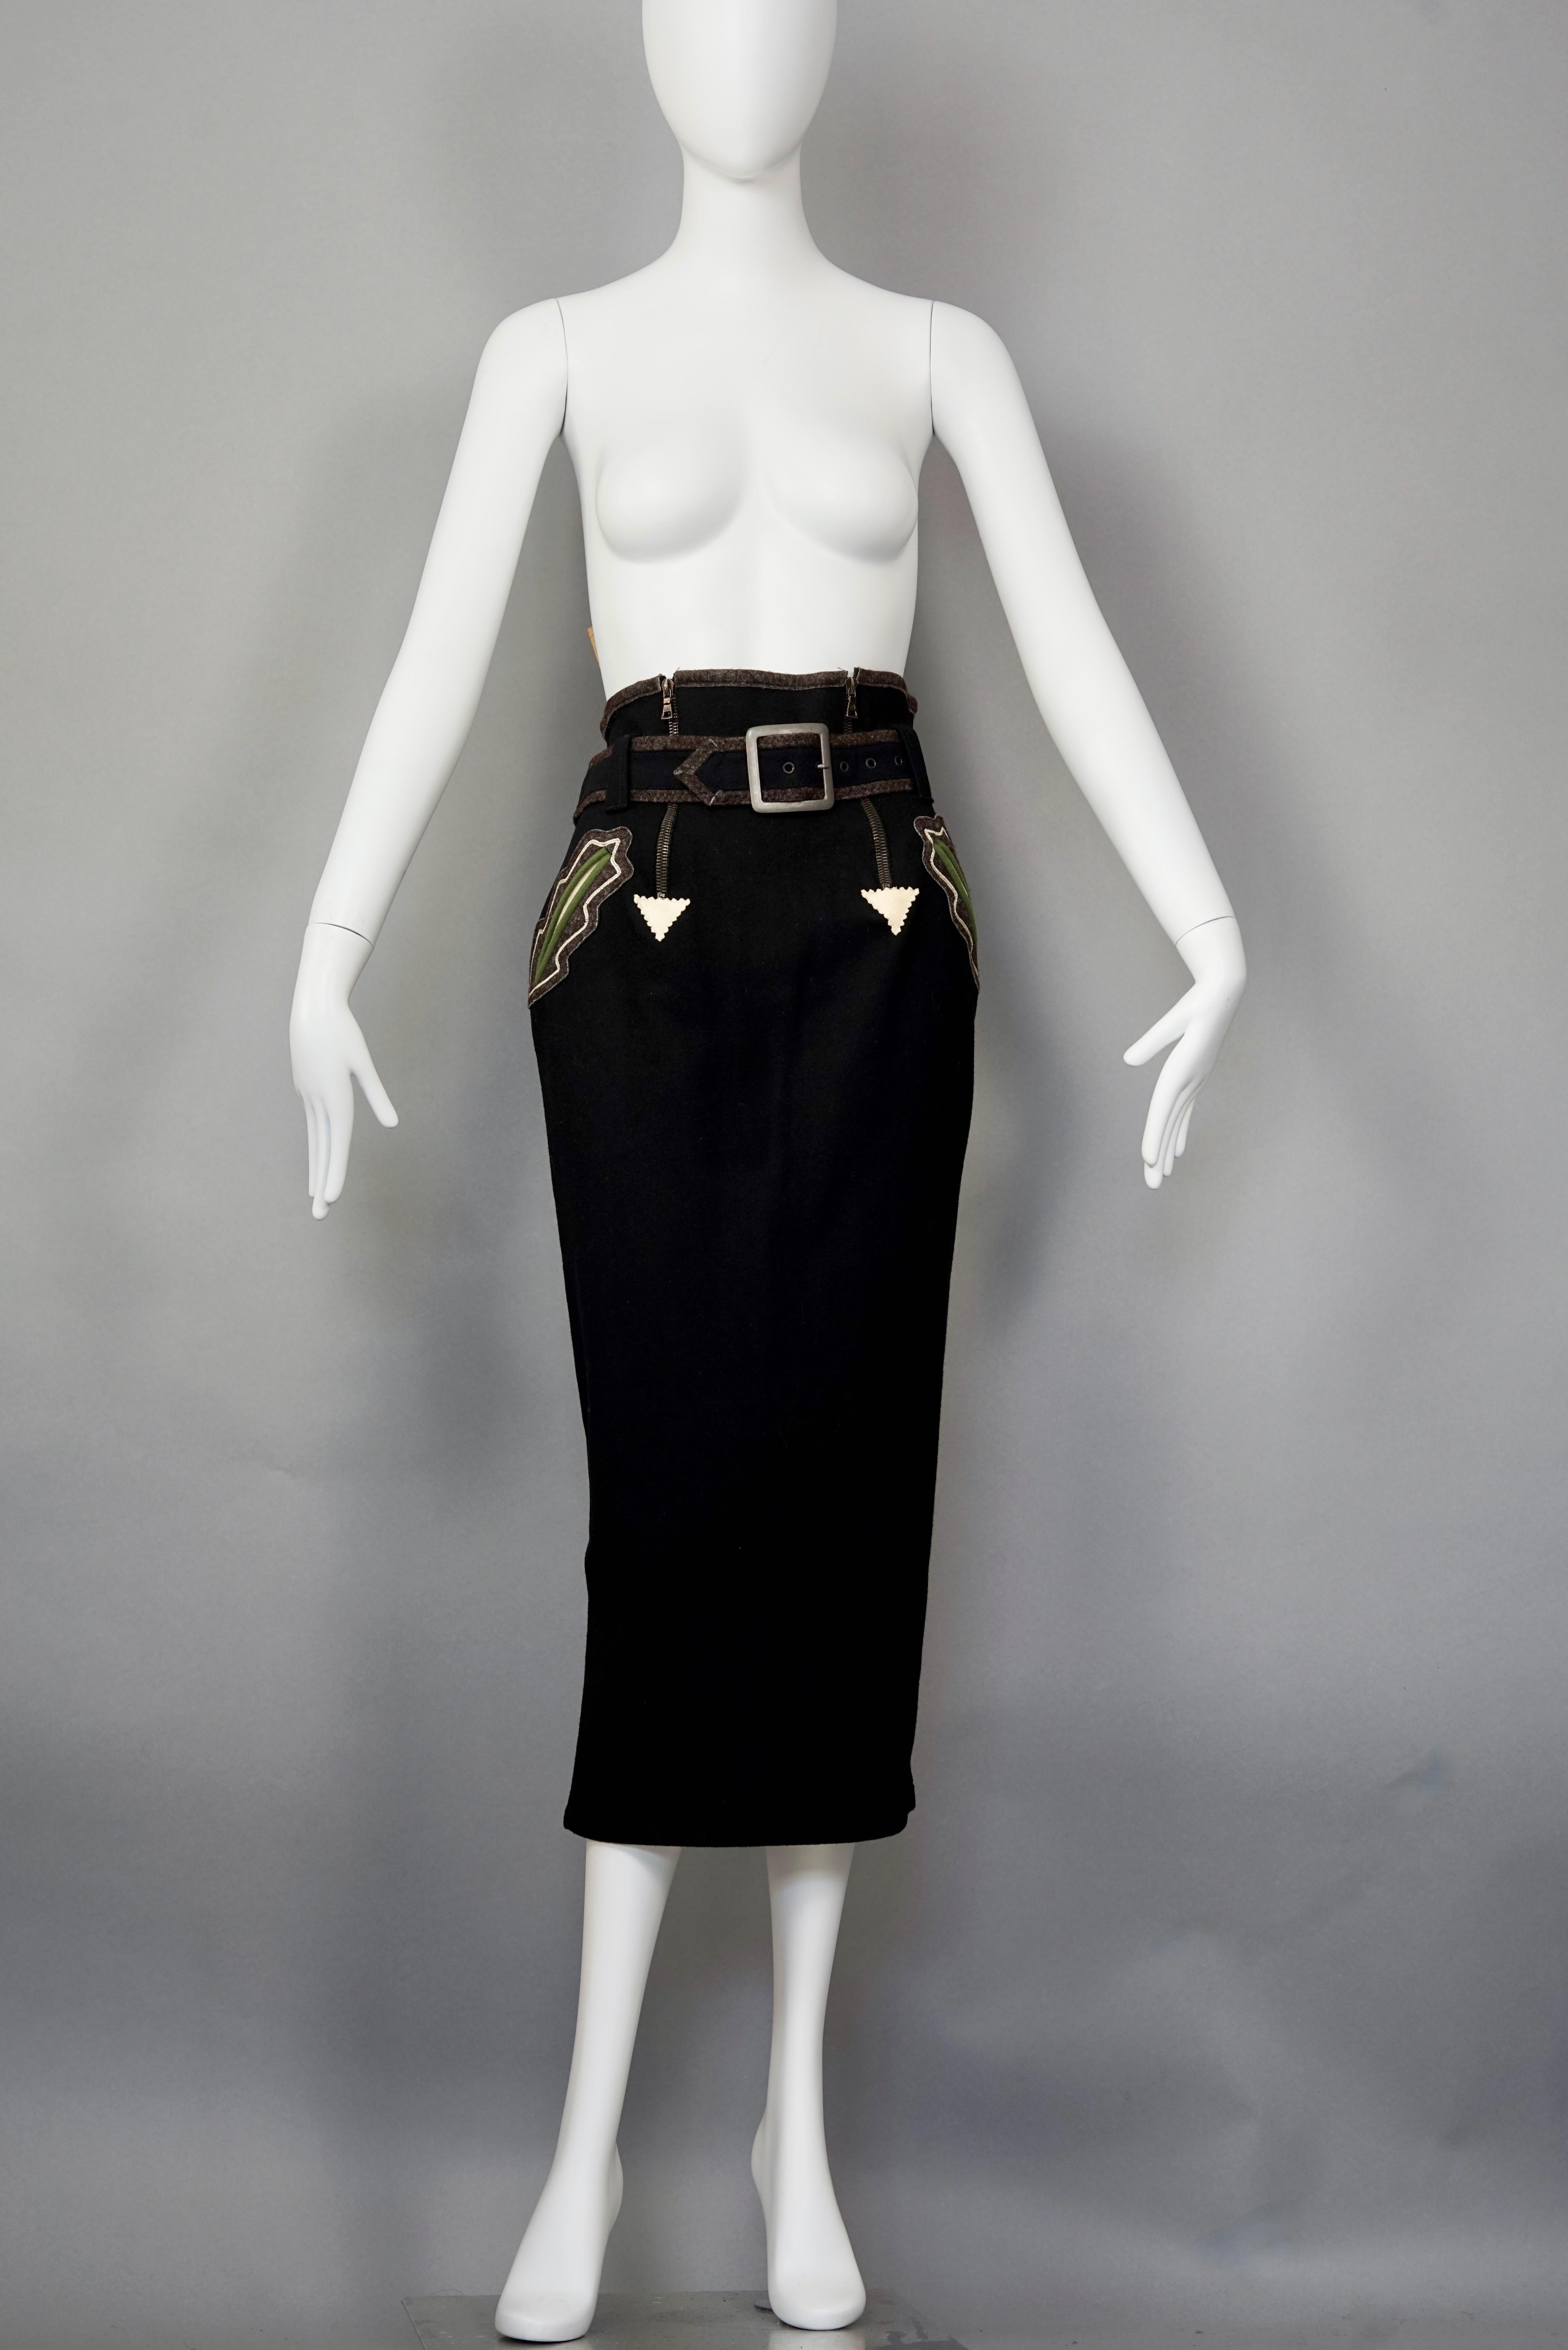 Vintage 1988 JEAN PAUL GAULTIER High Waist Belted Skirt

Measurements taken laid flat, please double waist and hips:
Waist: 14.56 inches (37 cm)
Hips: 18.50 inches (47 cm)
Length: 34.25 inches (87 cm)

Features:
- 100% Authentic JEAN PAUL